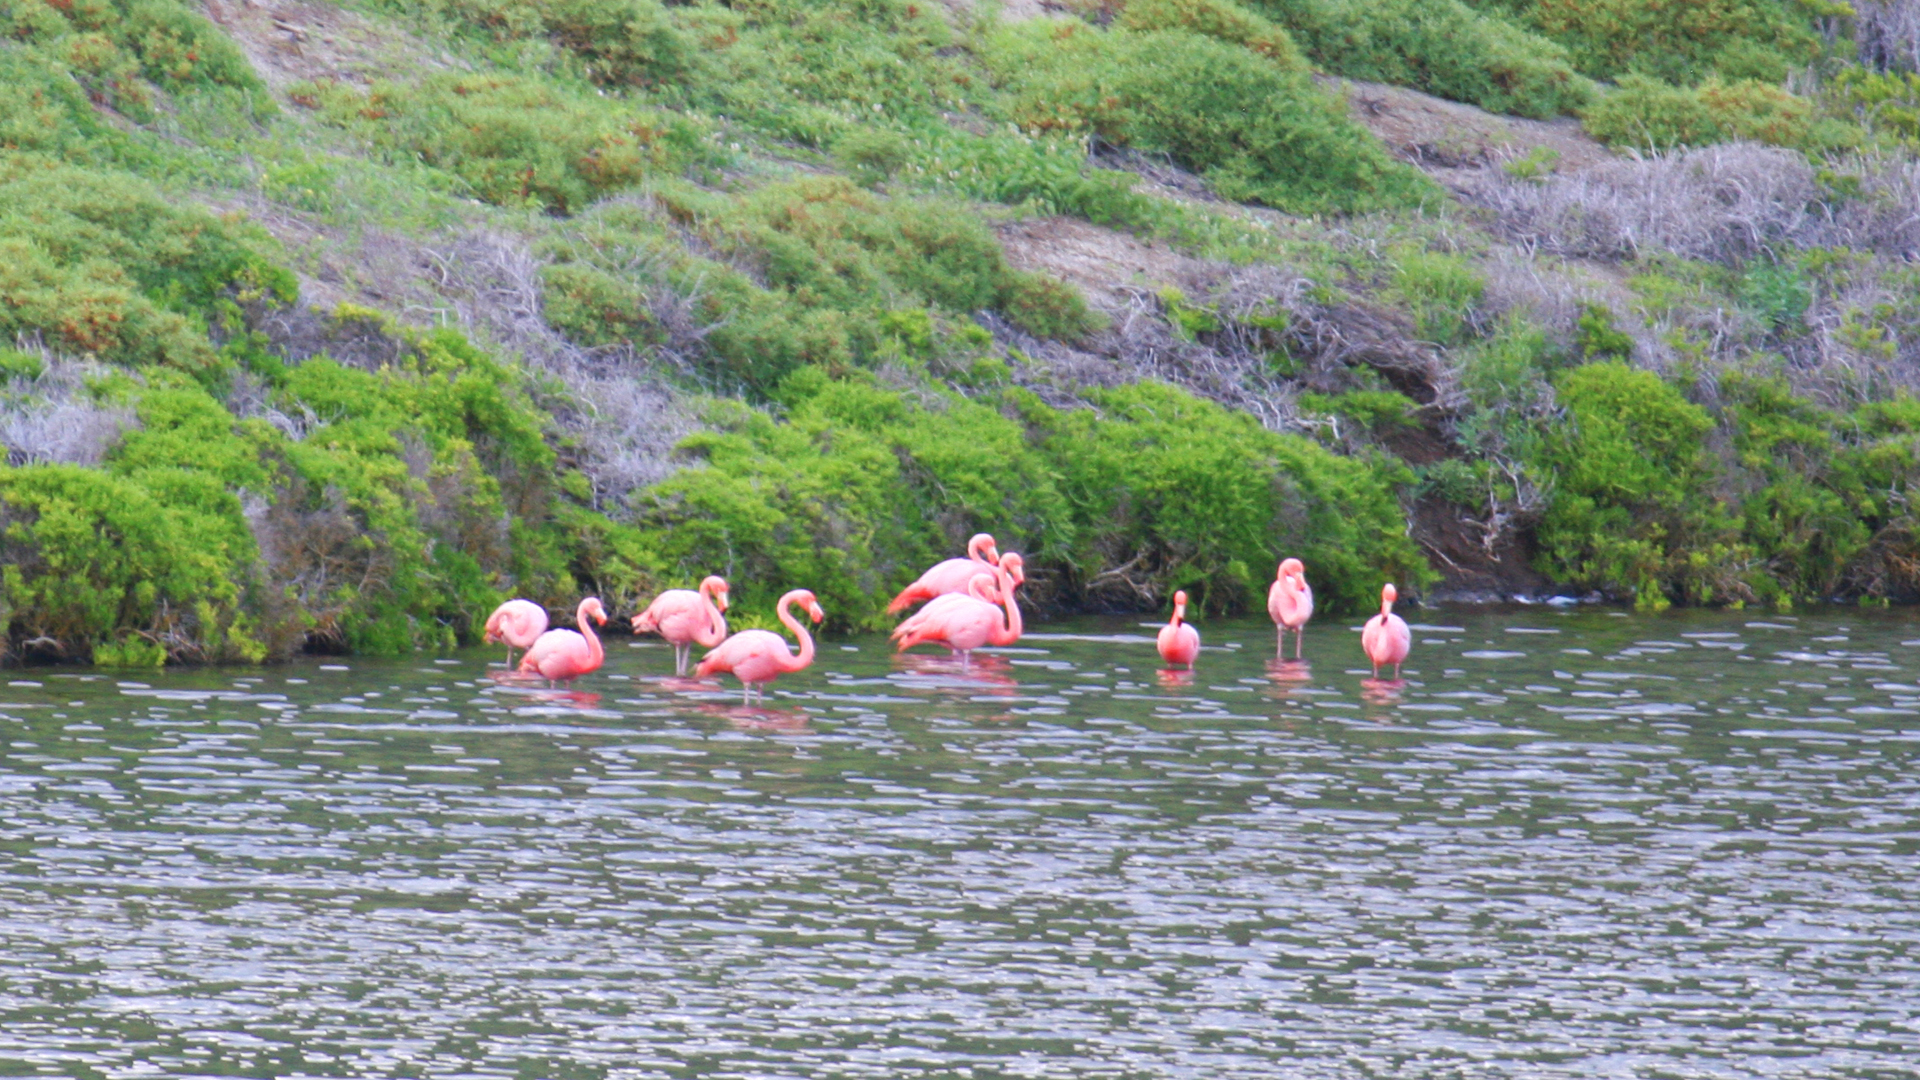 wp-content/uploads/itineraries/Galapagos/032410galapagos_bainbridge_flamingo (4).JPG